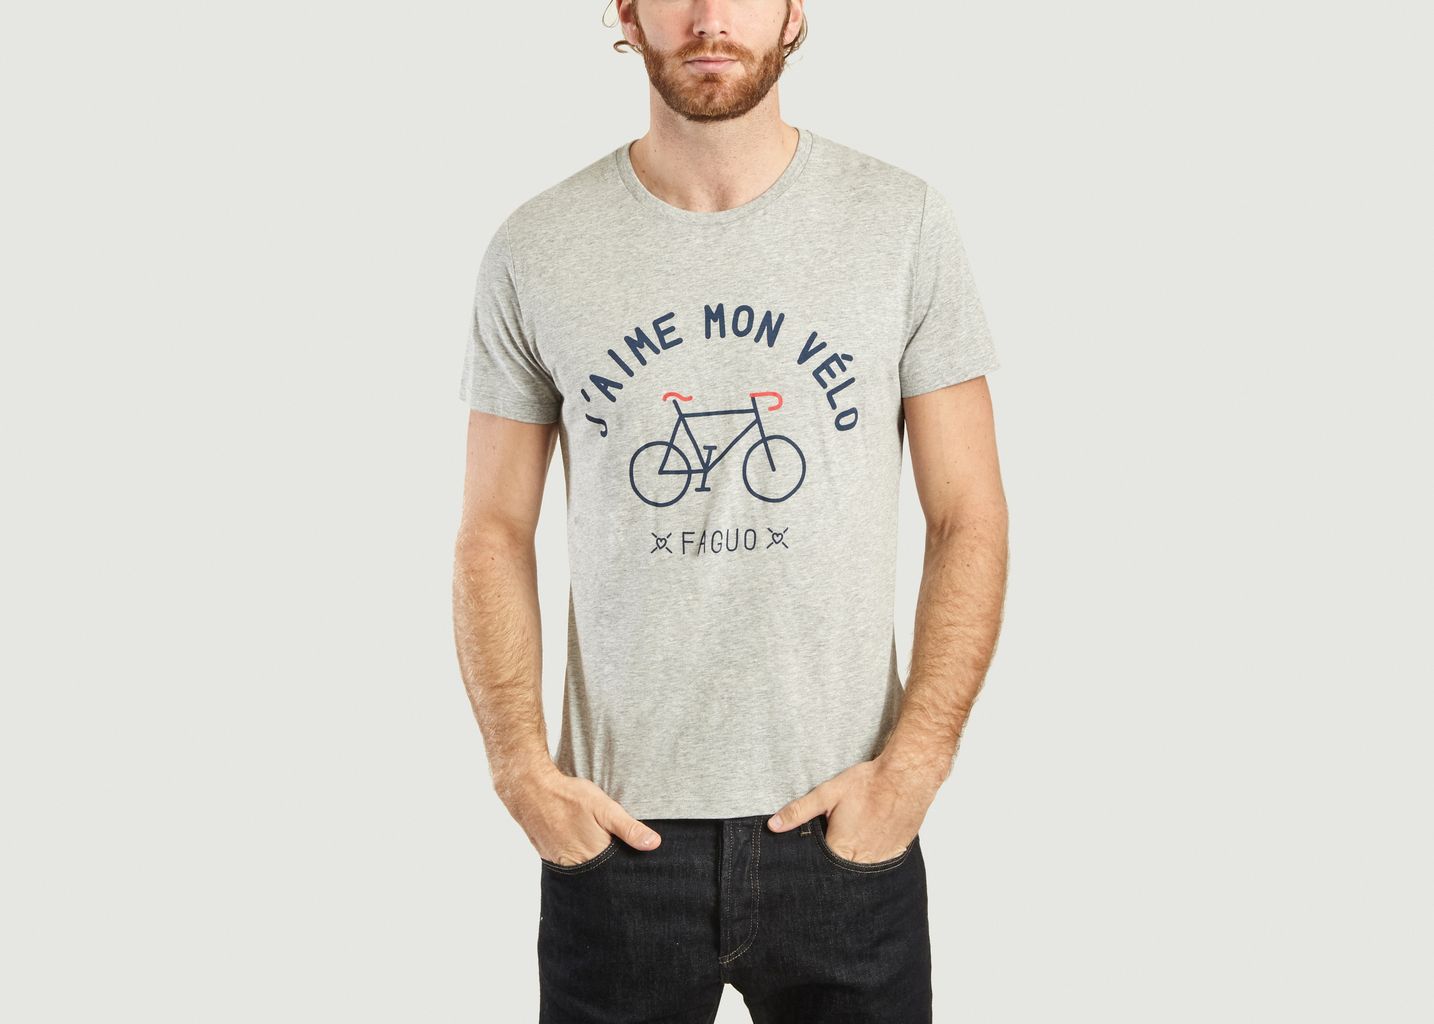 J'Aime Mon Vélo T-shirt - Faguo